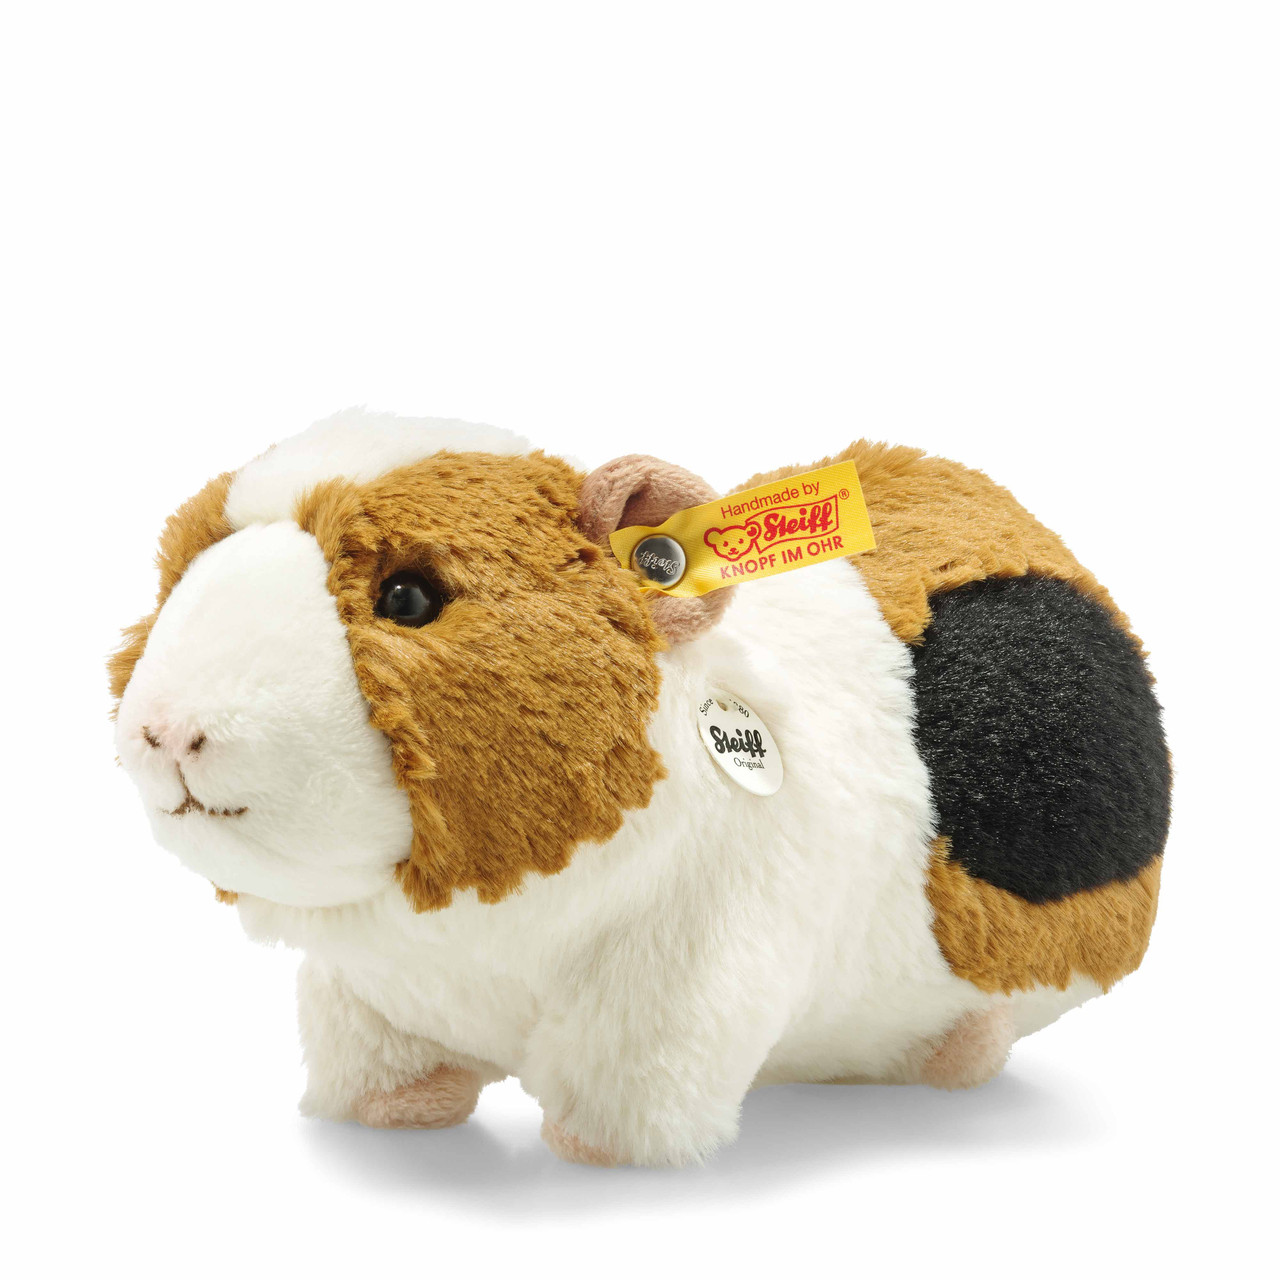 guinea pig plush toy